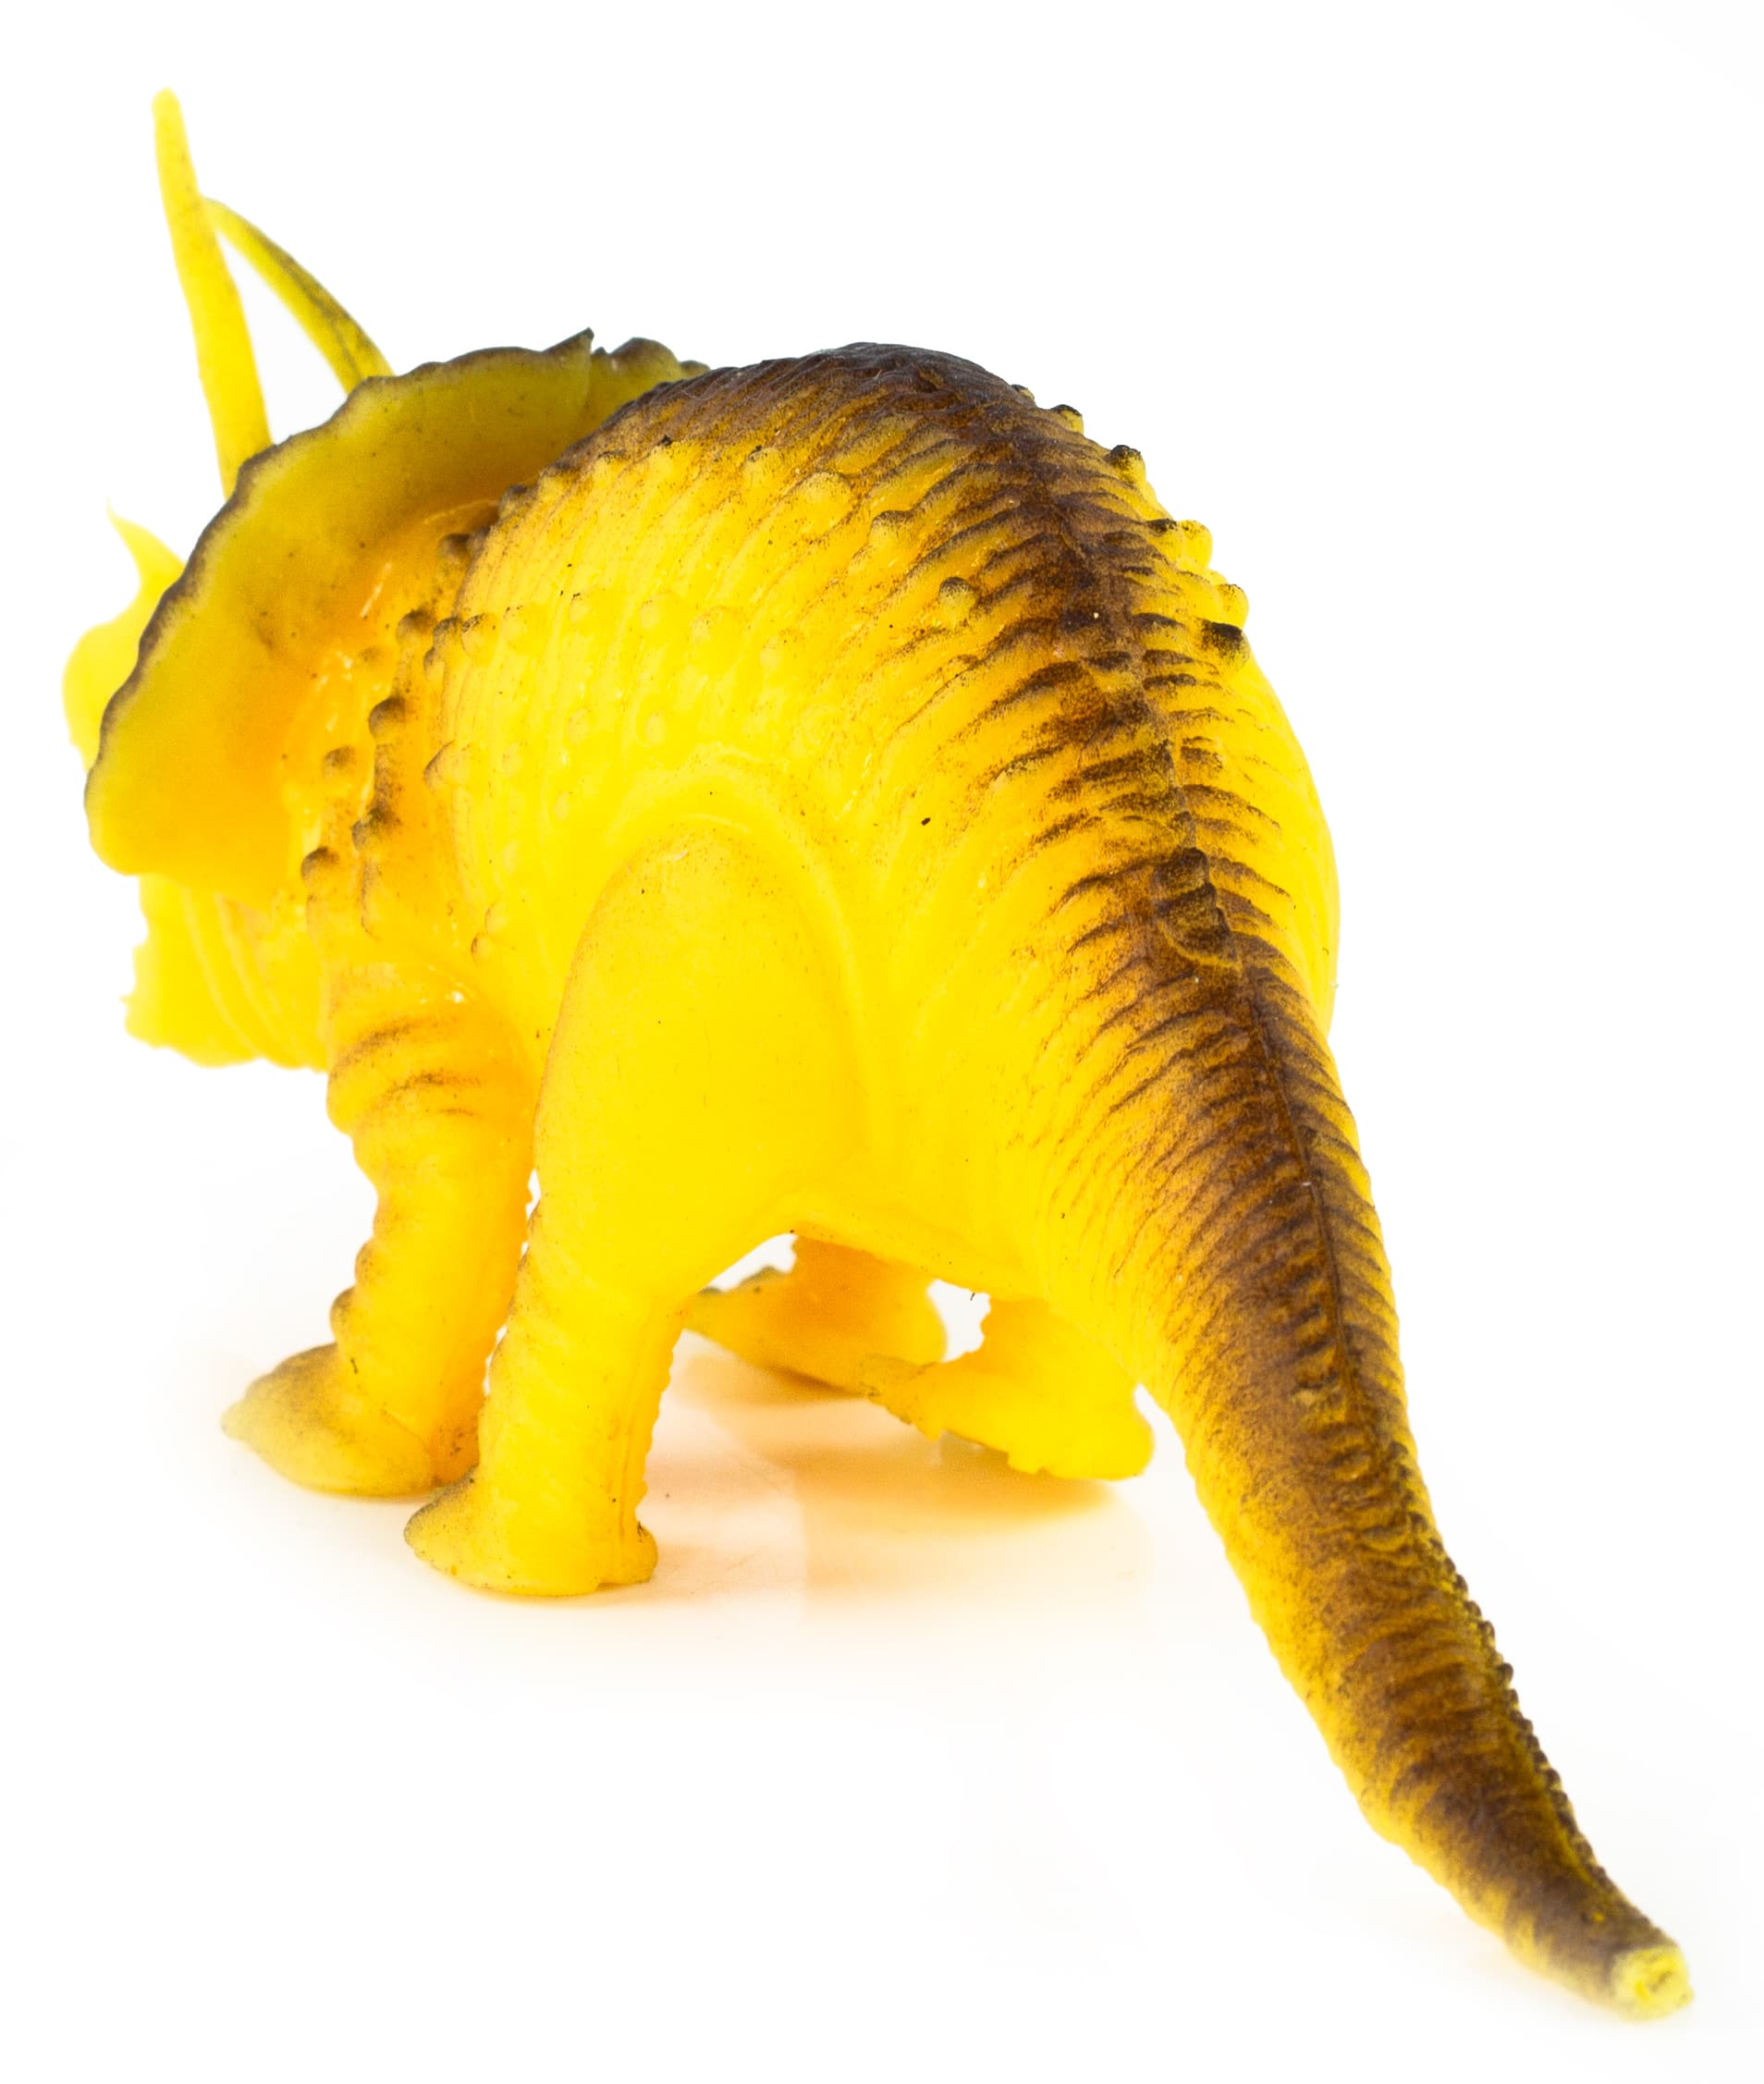 Резиновые фигурки-тянучки Stretches Fun «Динозавры» A121-DB, 12-14 см. / 4 шт.